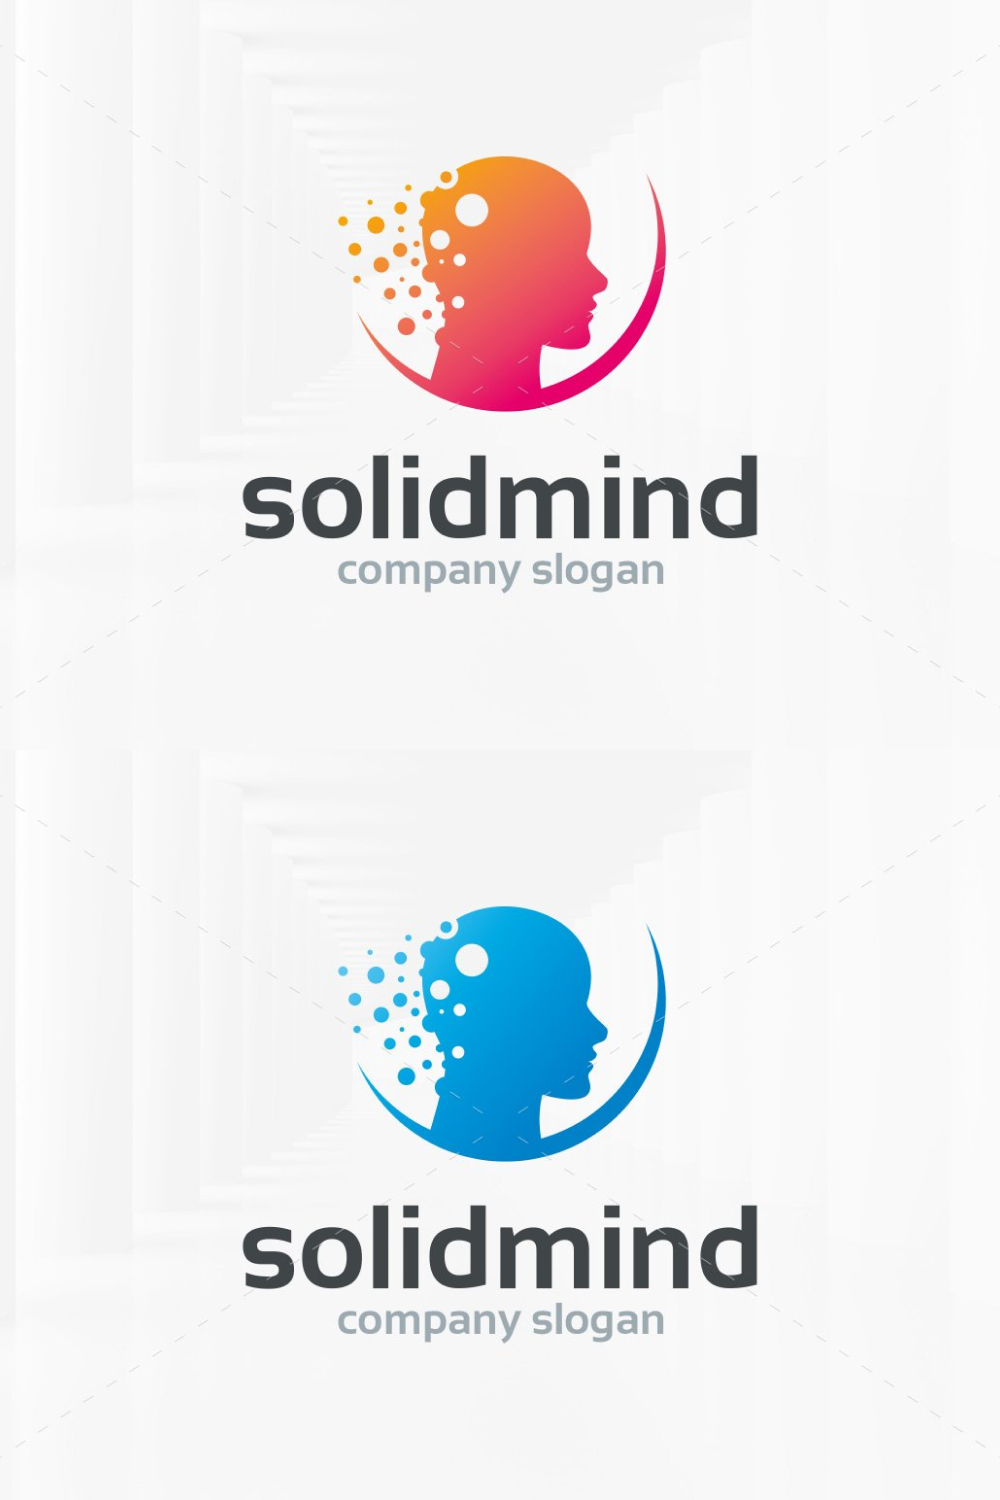 Interesting logos for you.